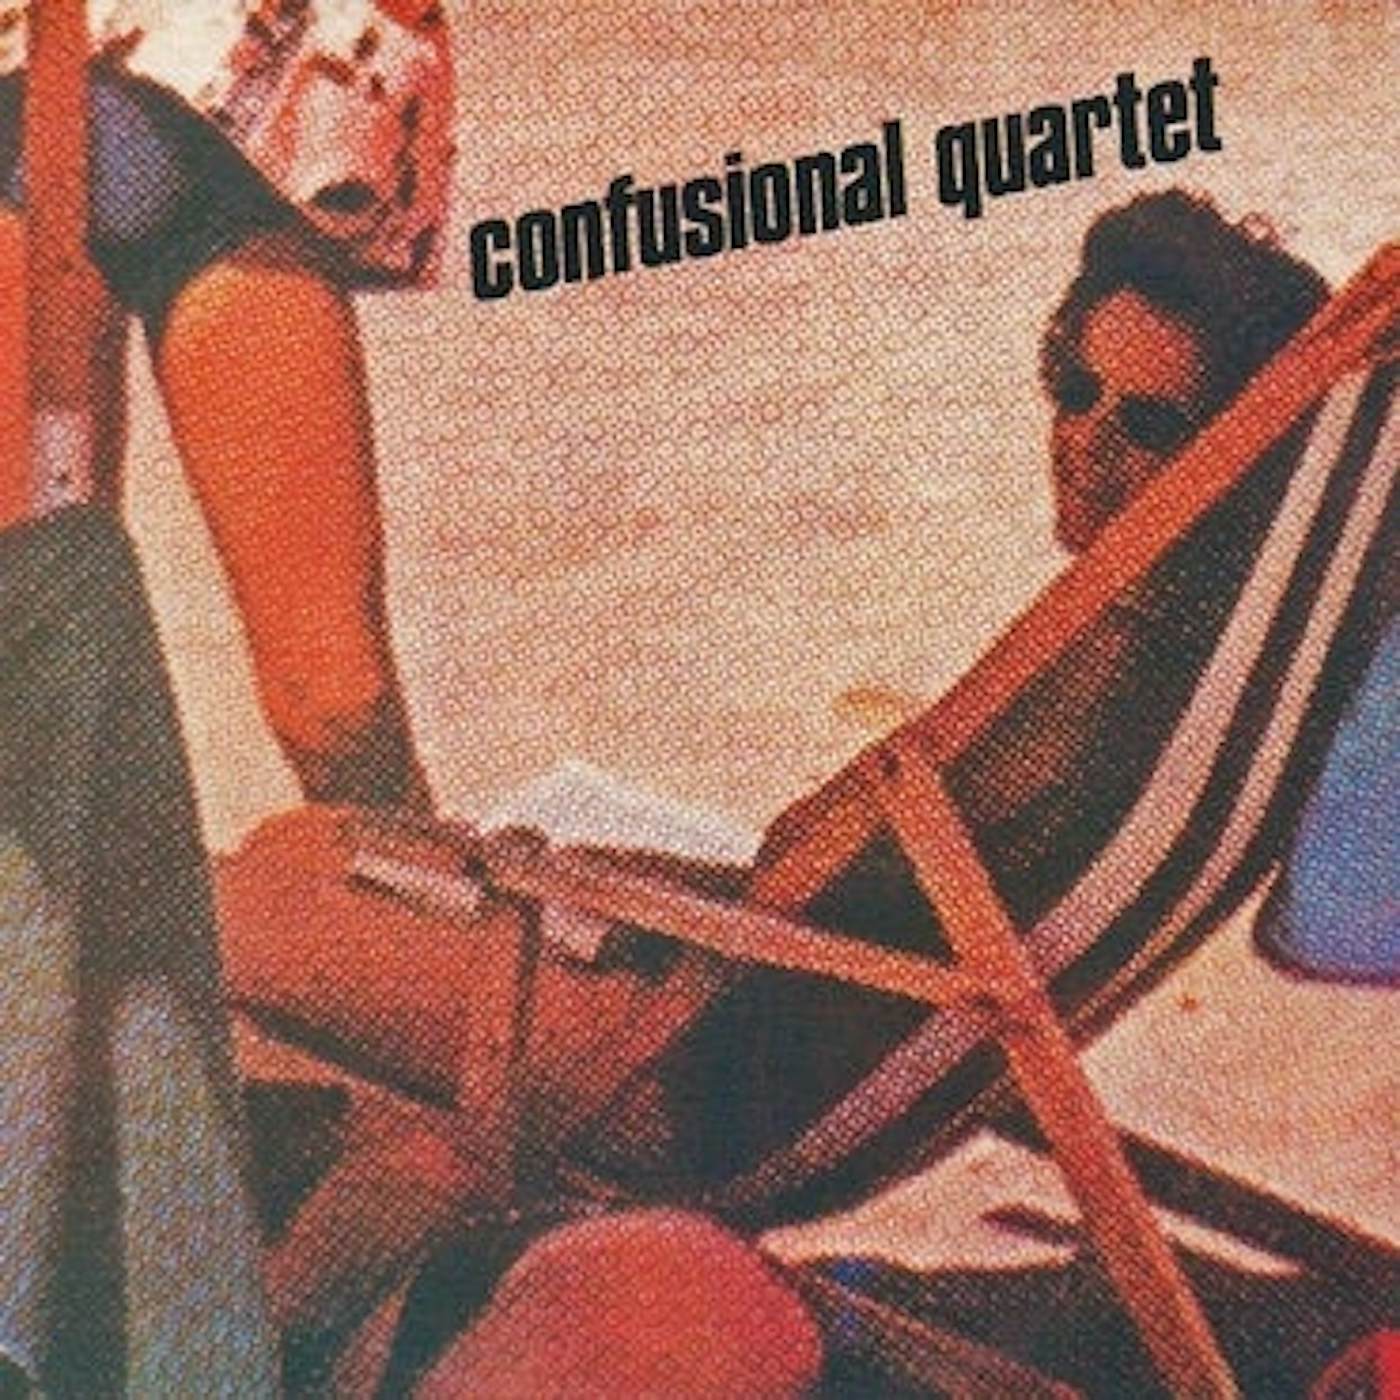 Confusional Quartet LP Vinyl Record - Confusional Quartet